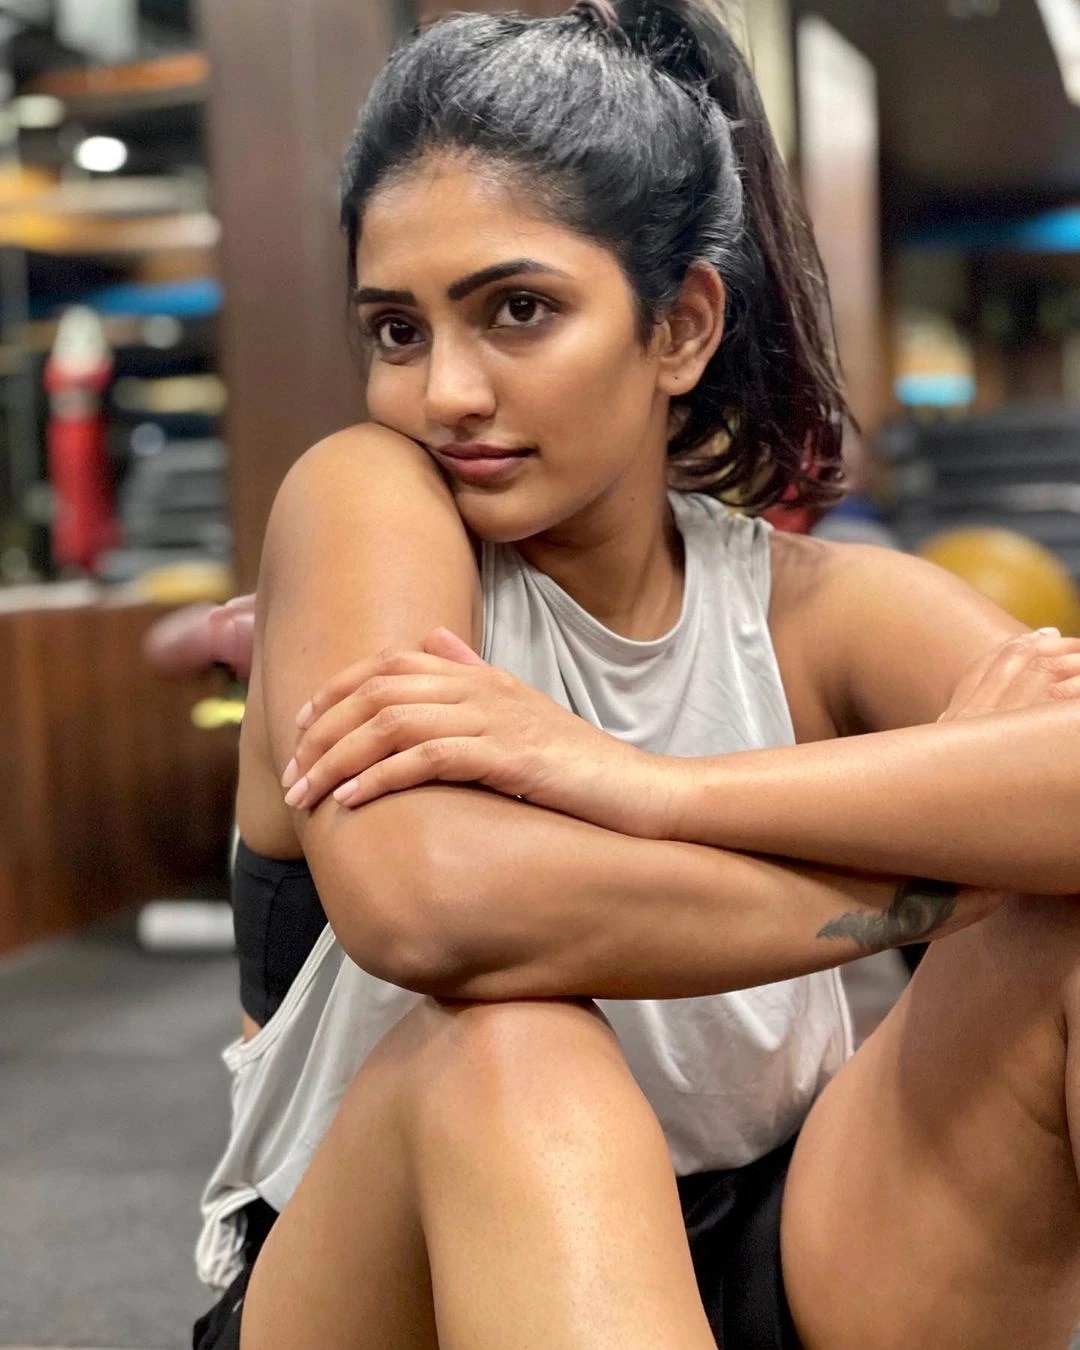 Eesha Rebba stills in Gym during her workout